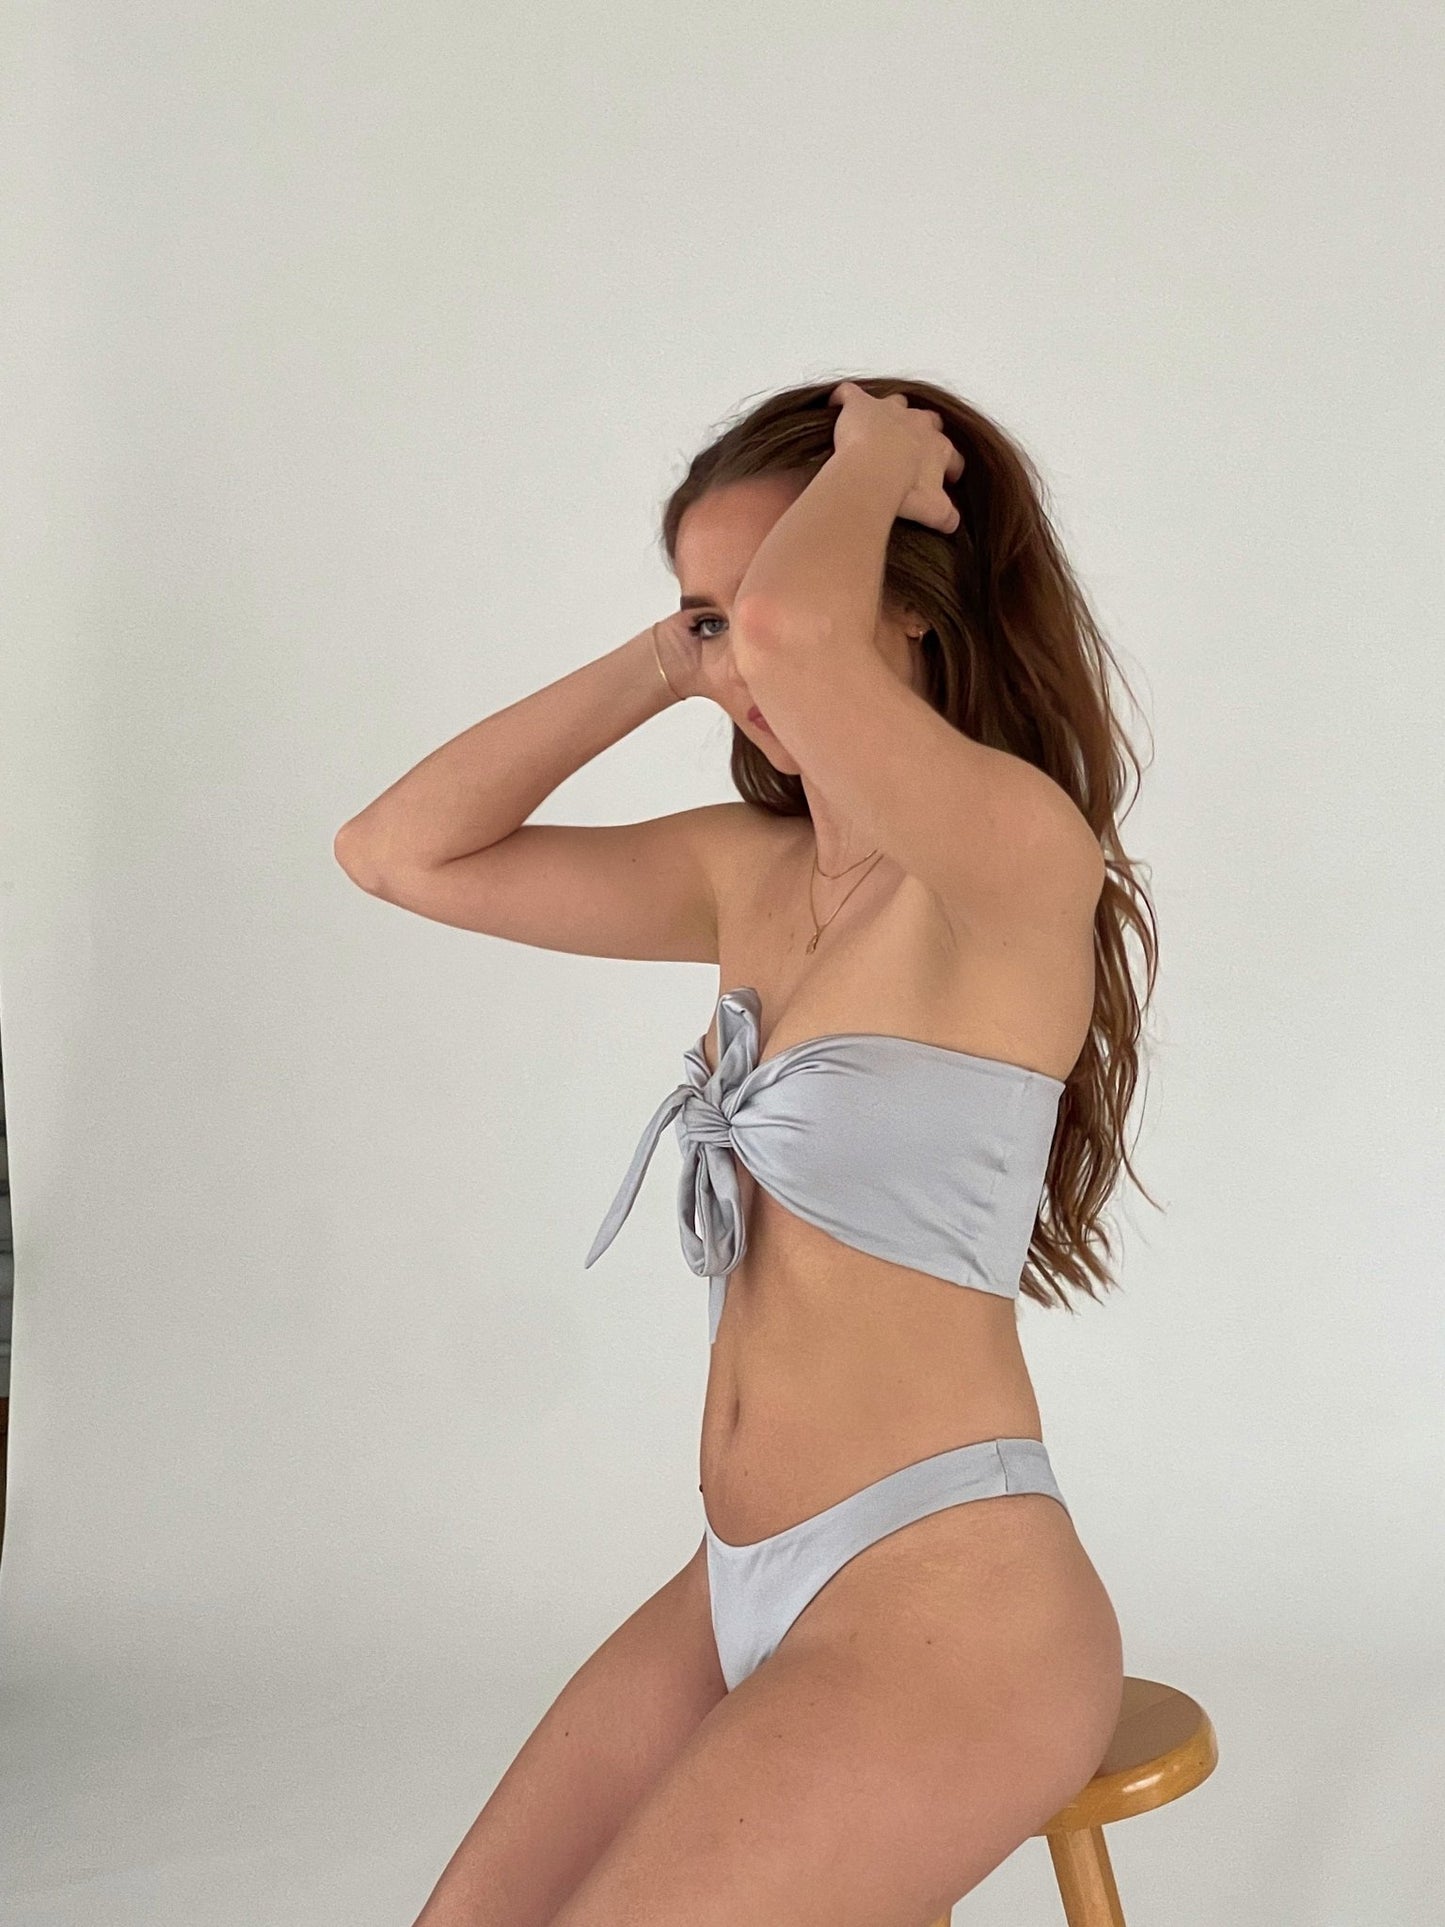 Filigrana bikini top - Blanche Olia